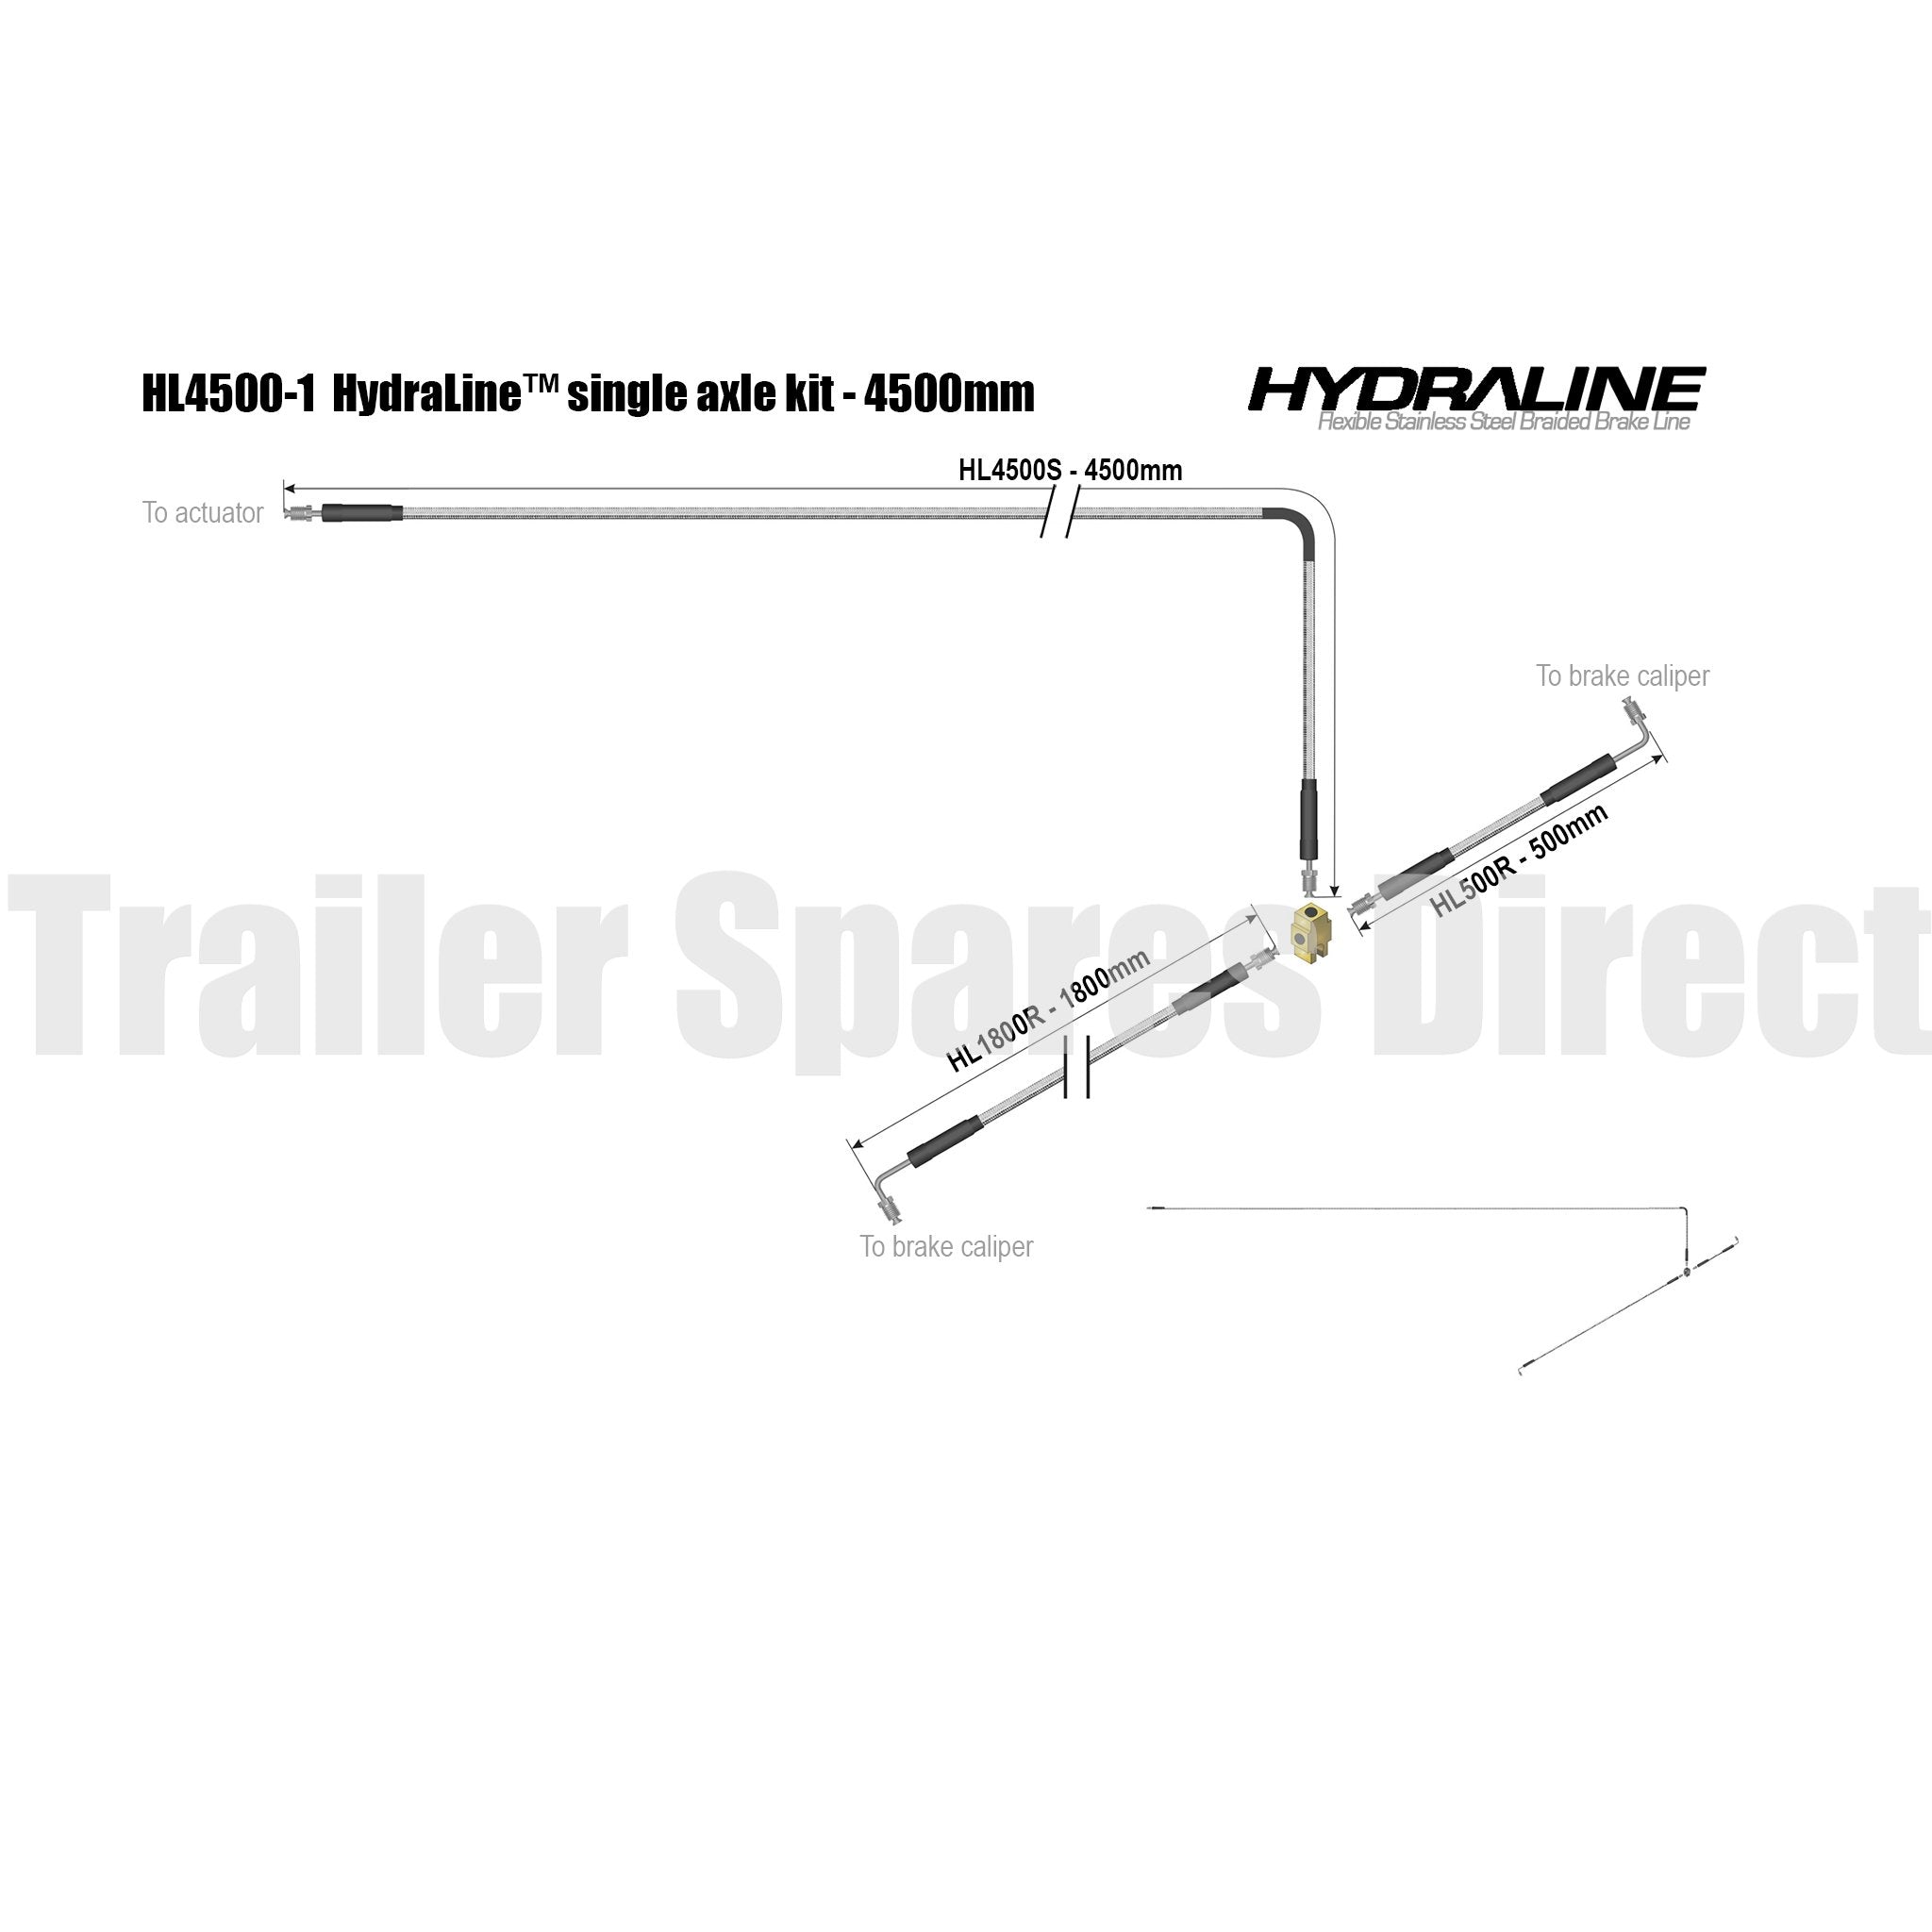 Hydraline kit 4500mm single axle diagram